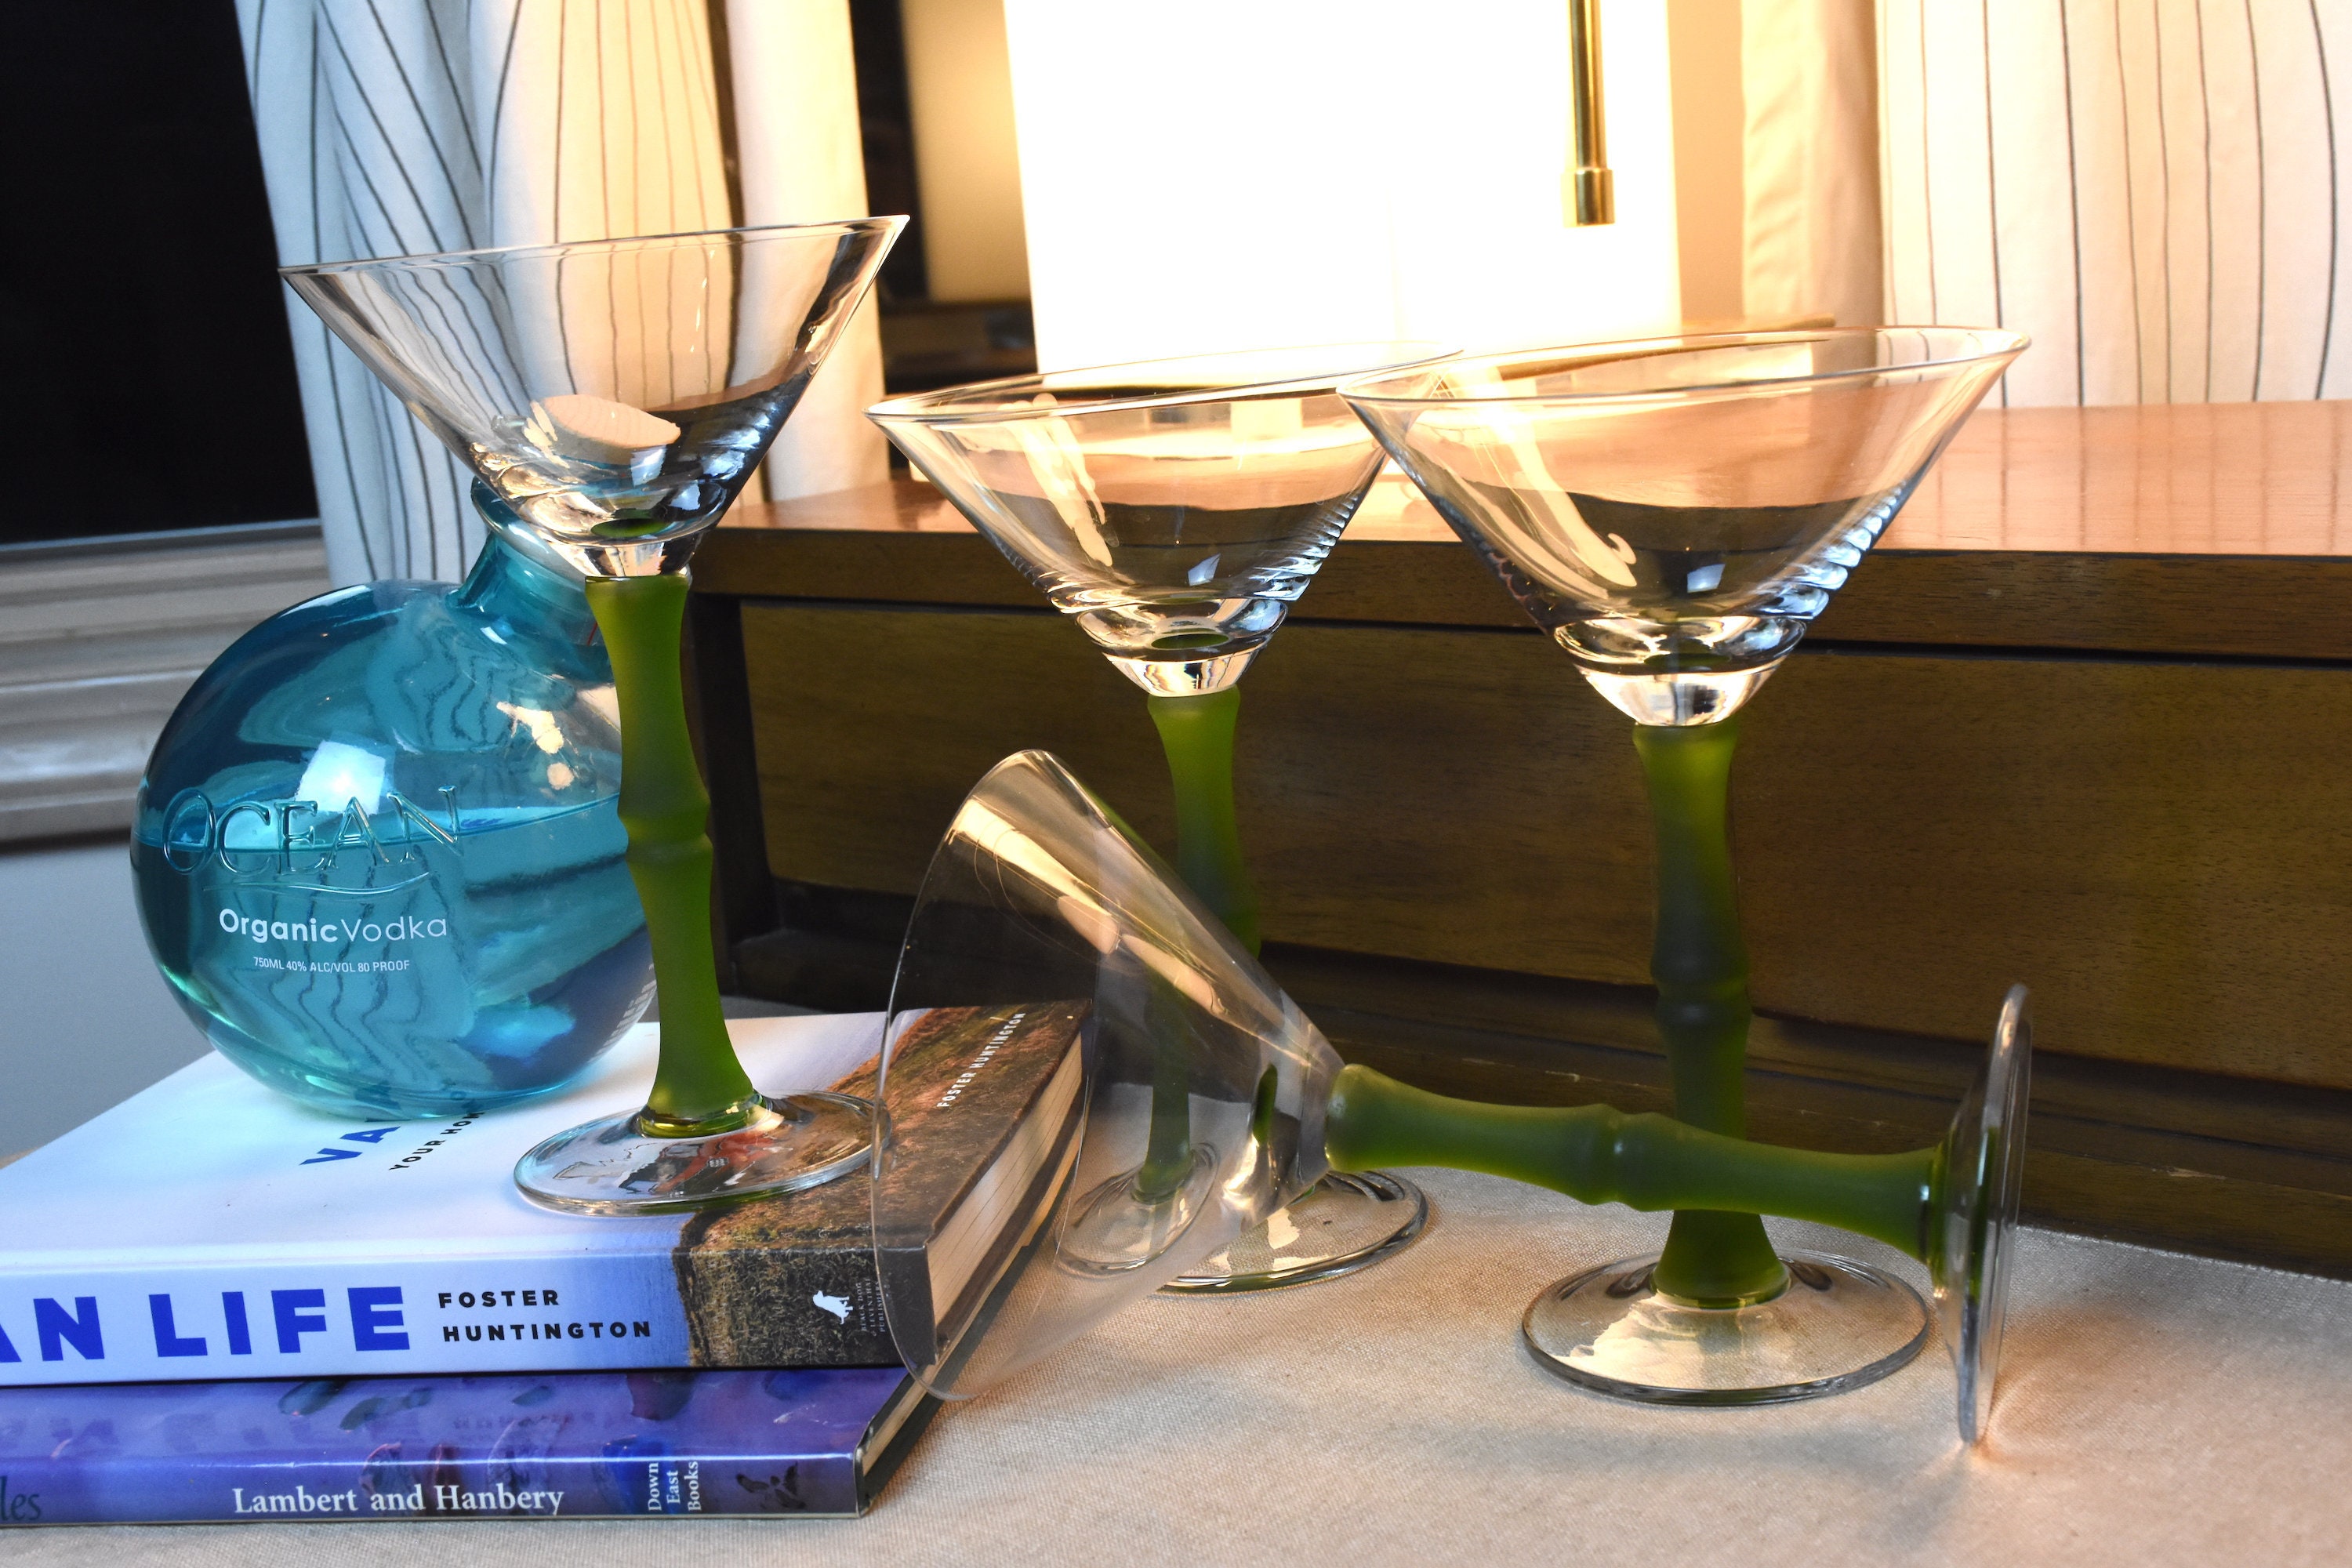 Creative Green Cocktail Glass Champagne Martini Goblet European Bar,  Restaurant Special-Interest Design Fun Wine Glass